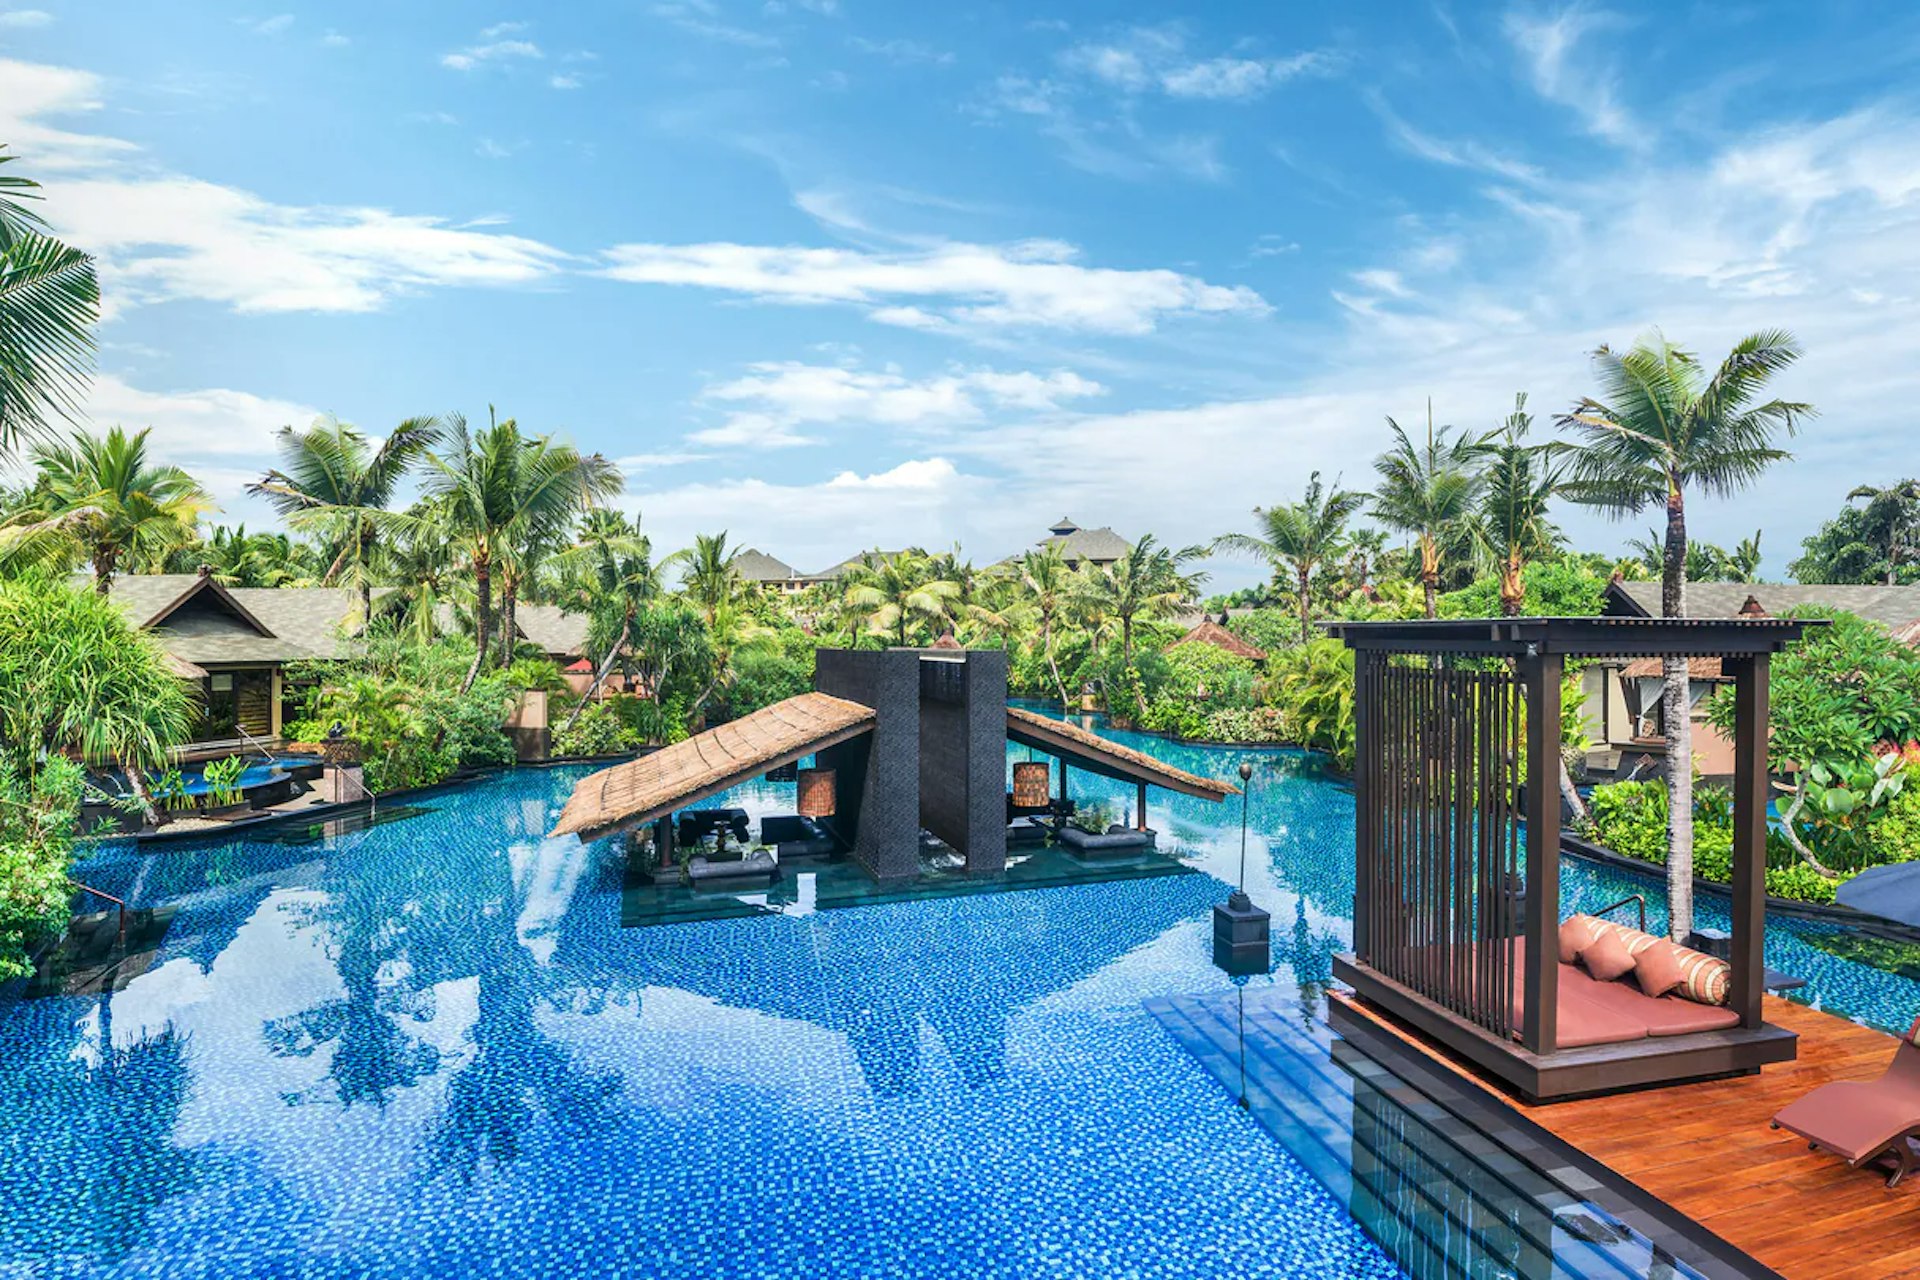 The Lagoon Pool at St. Regis Bali